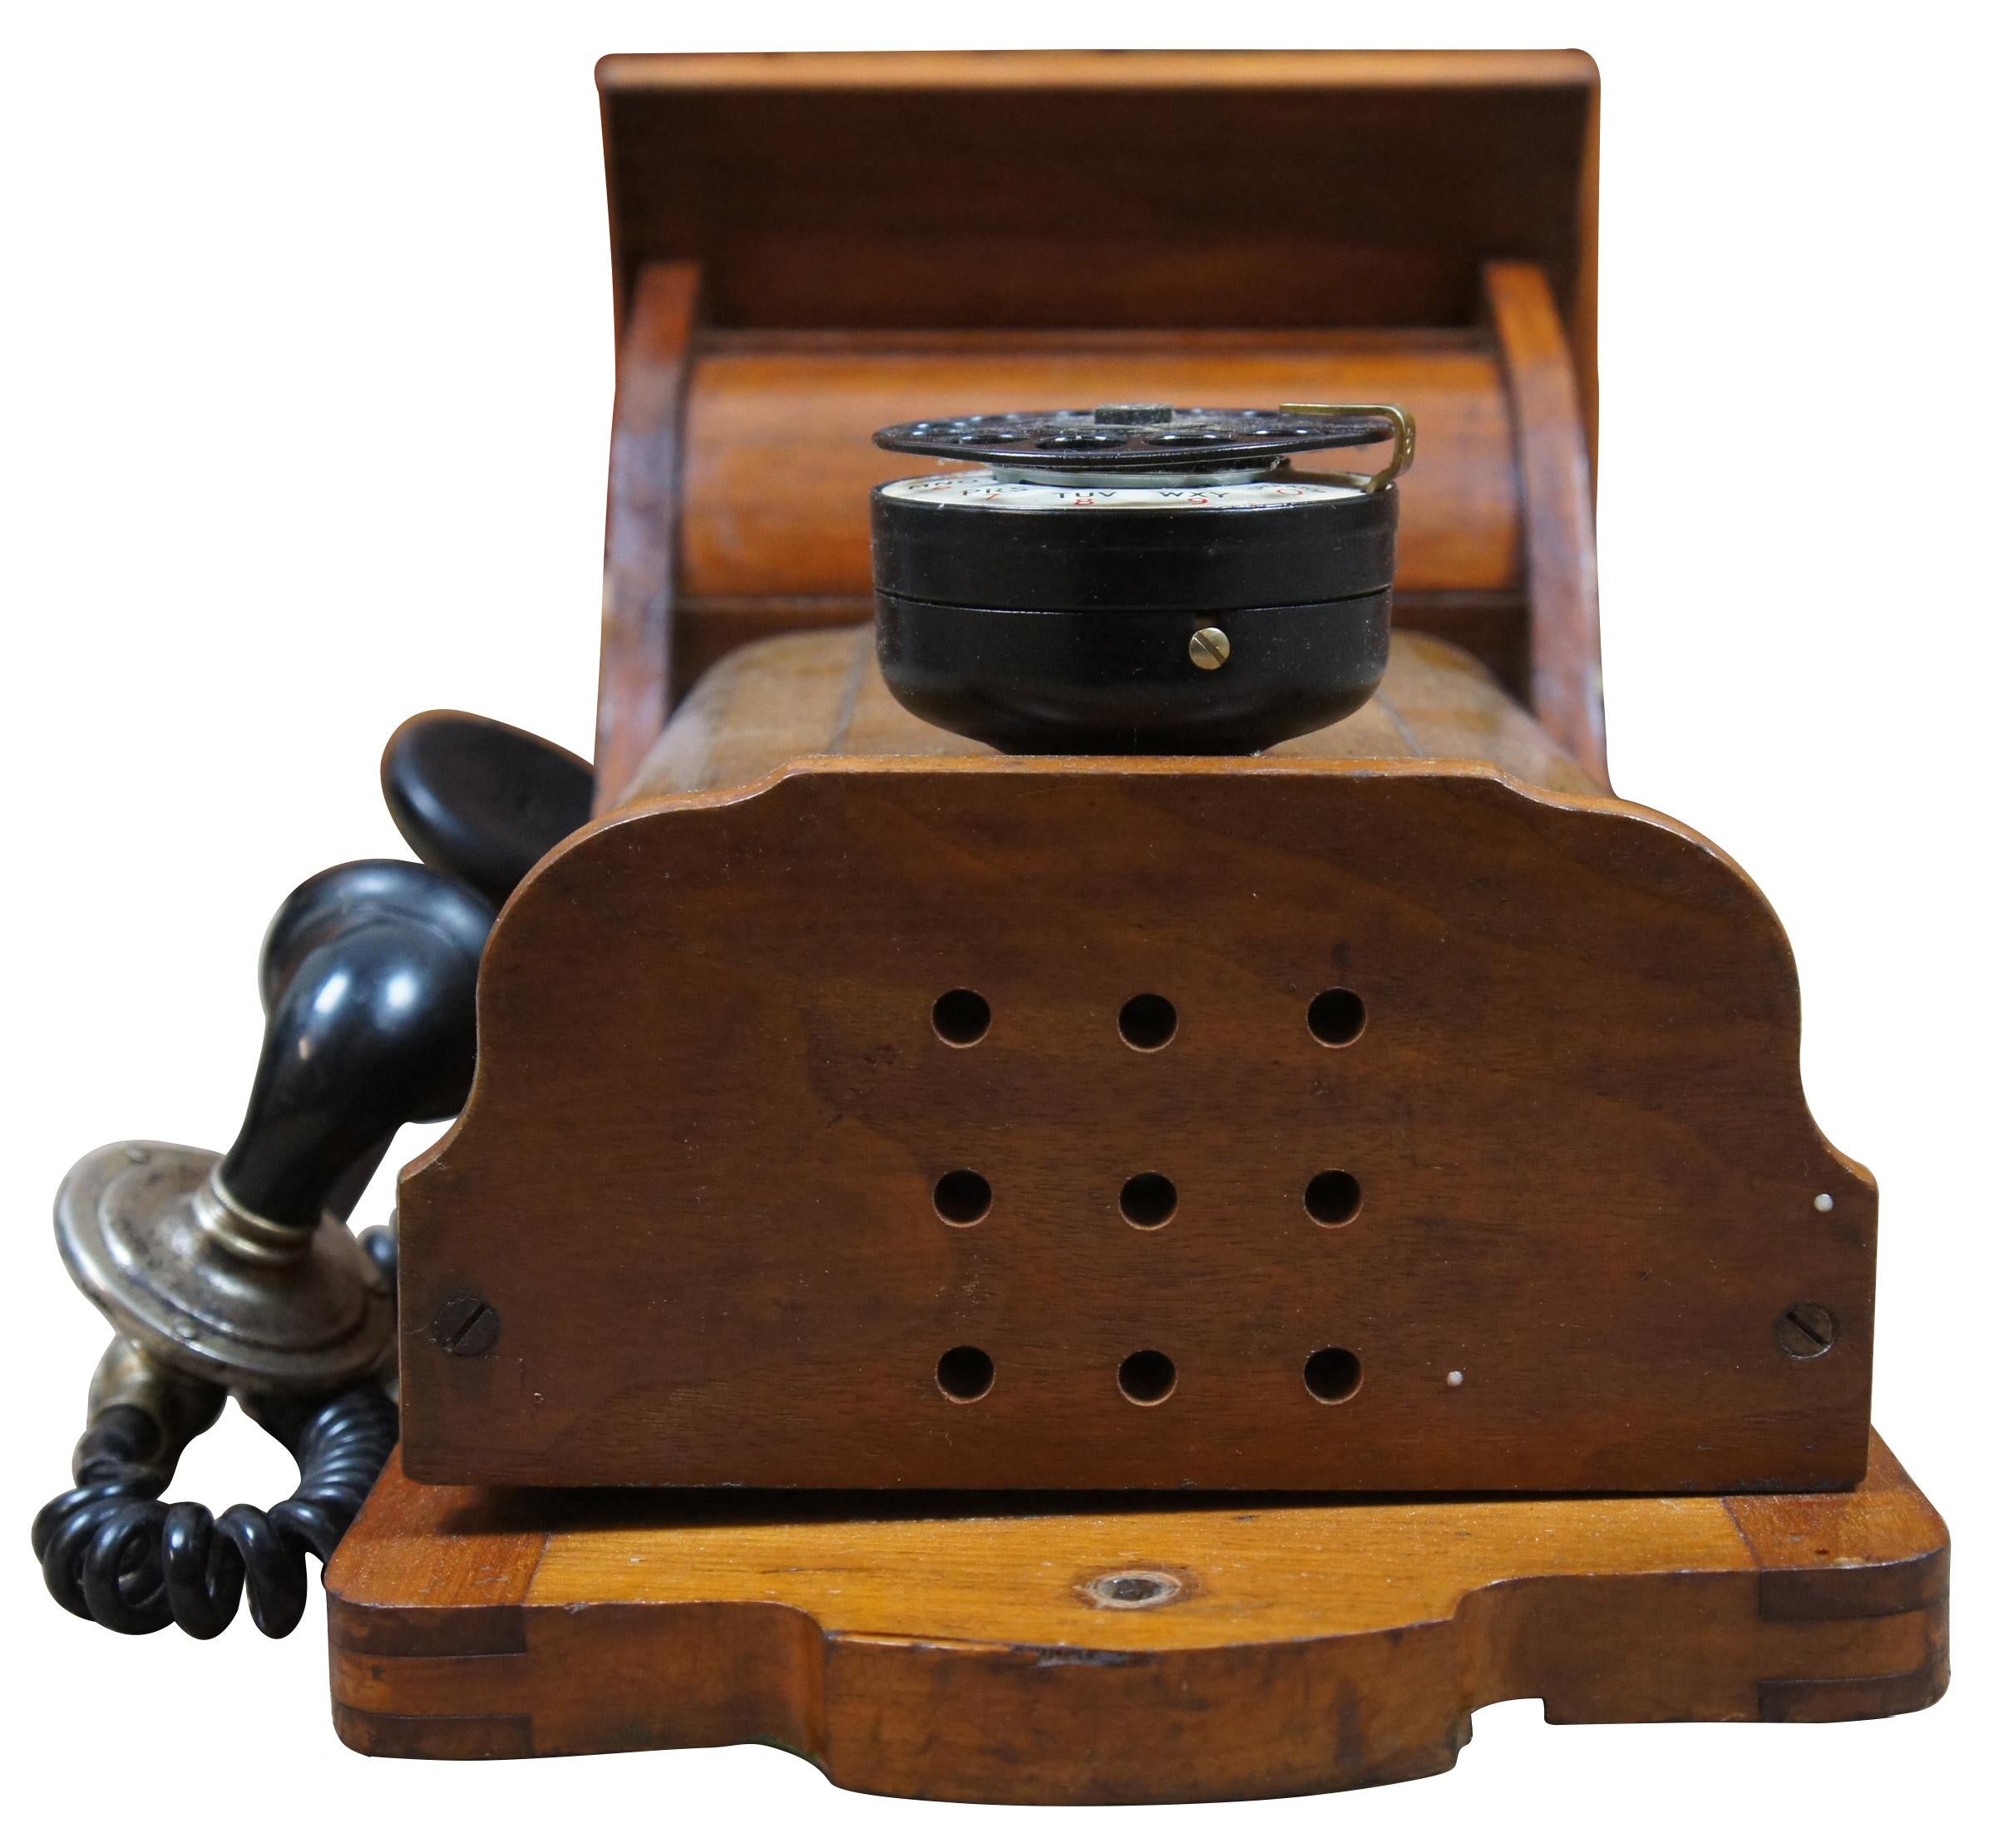 1924 phone